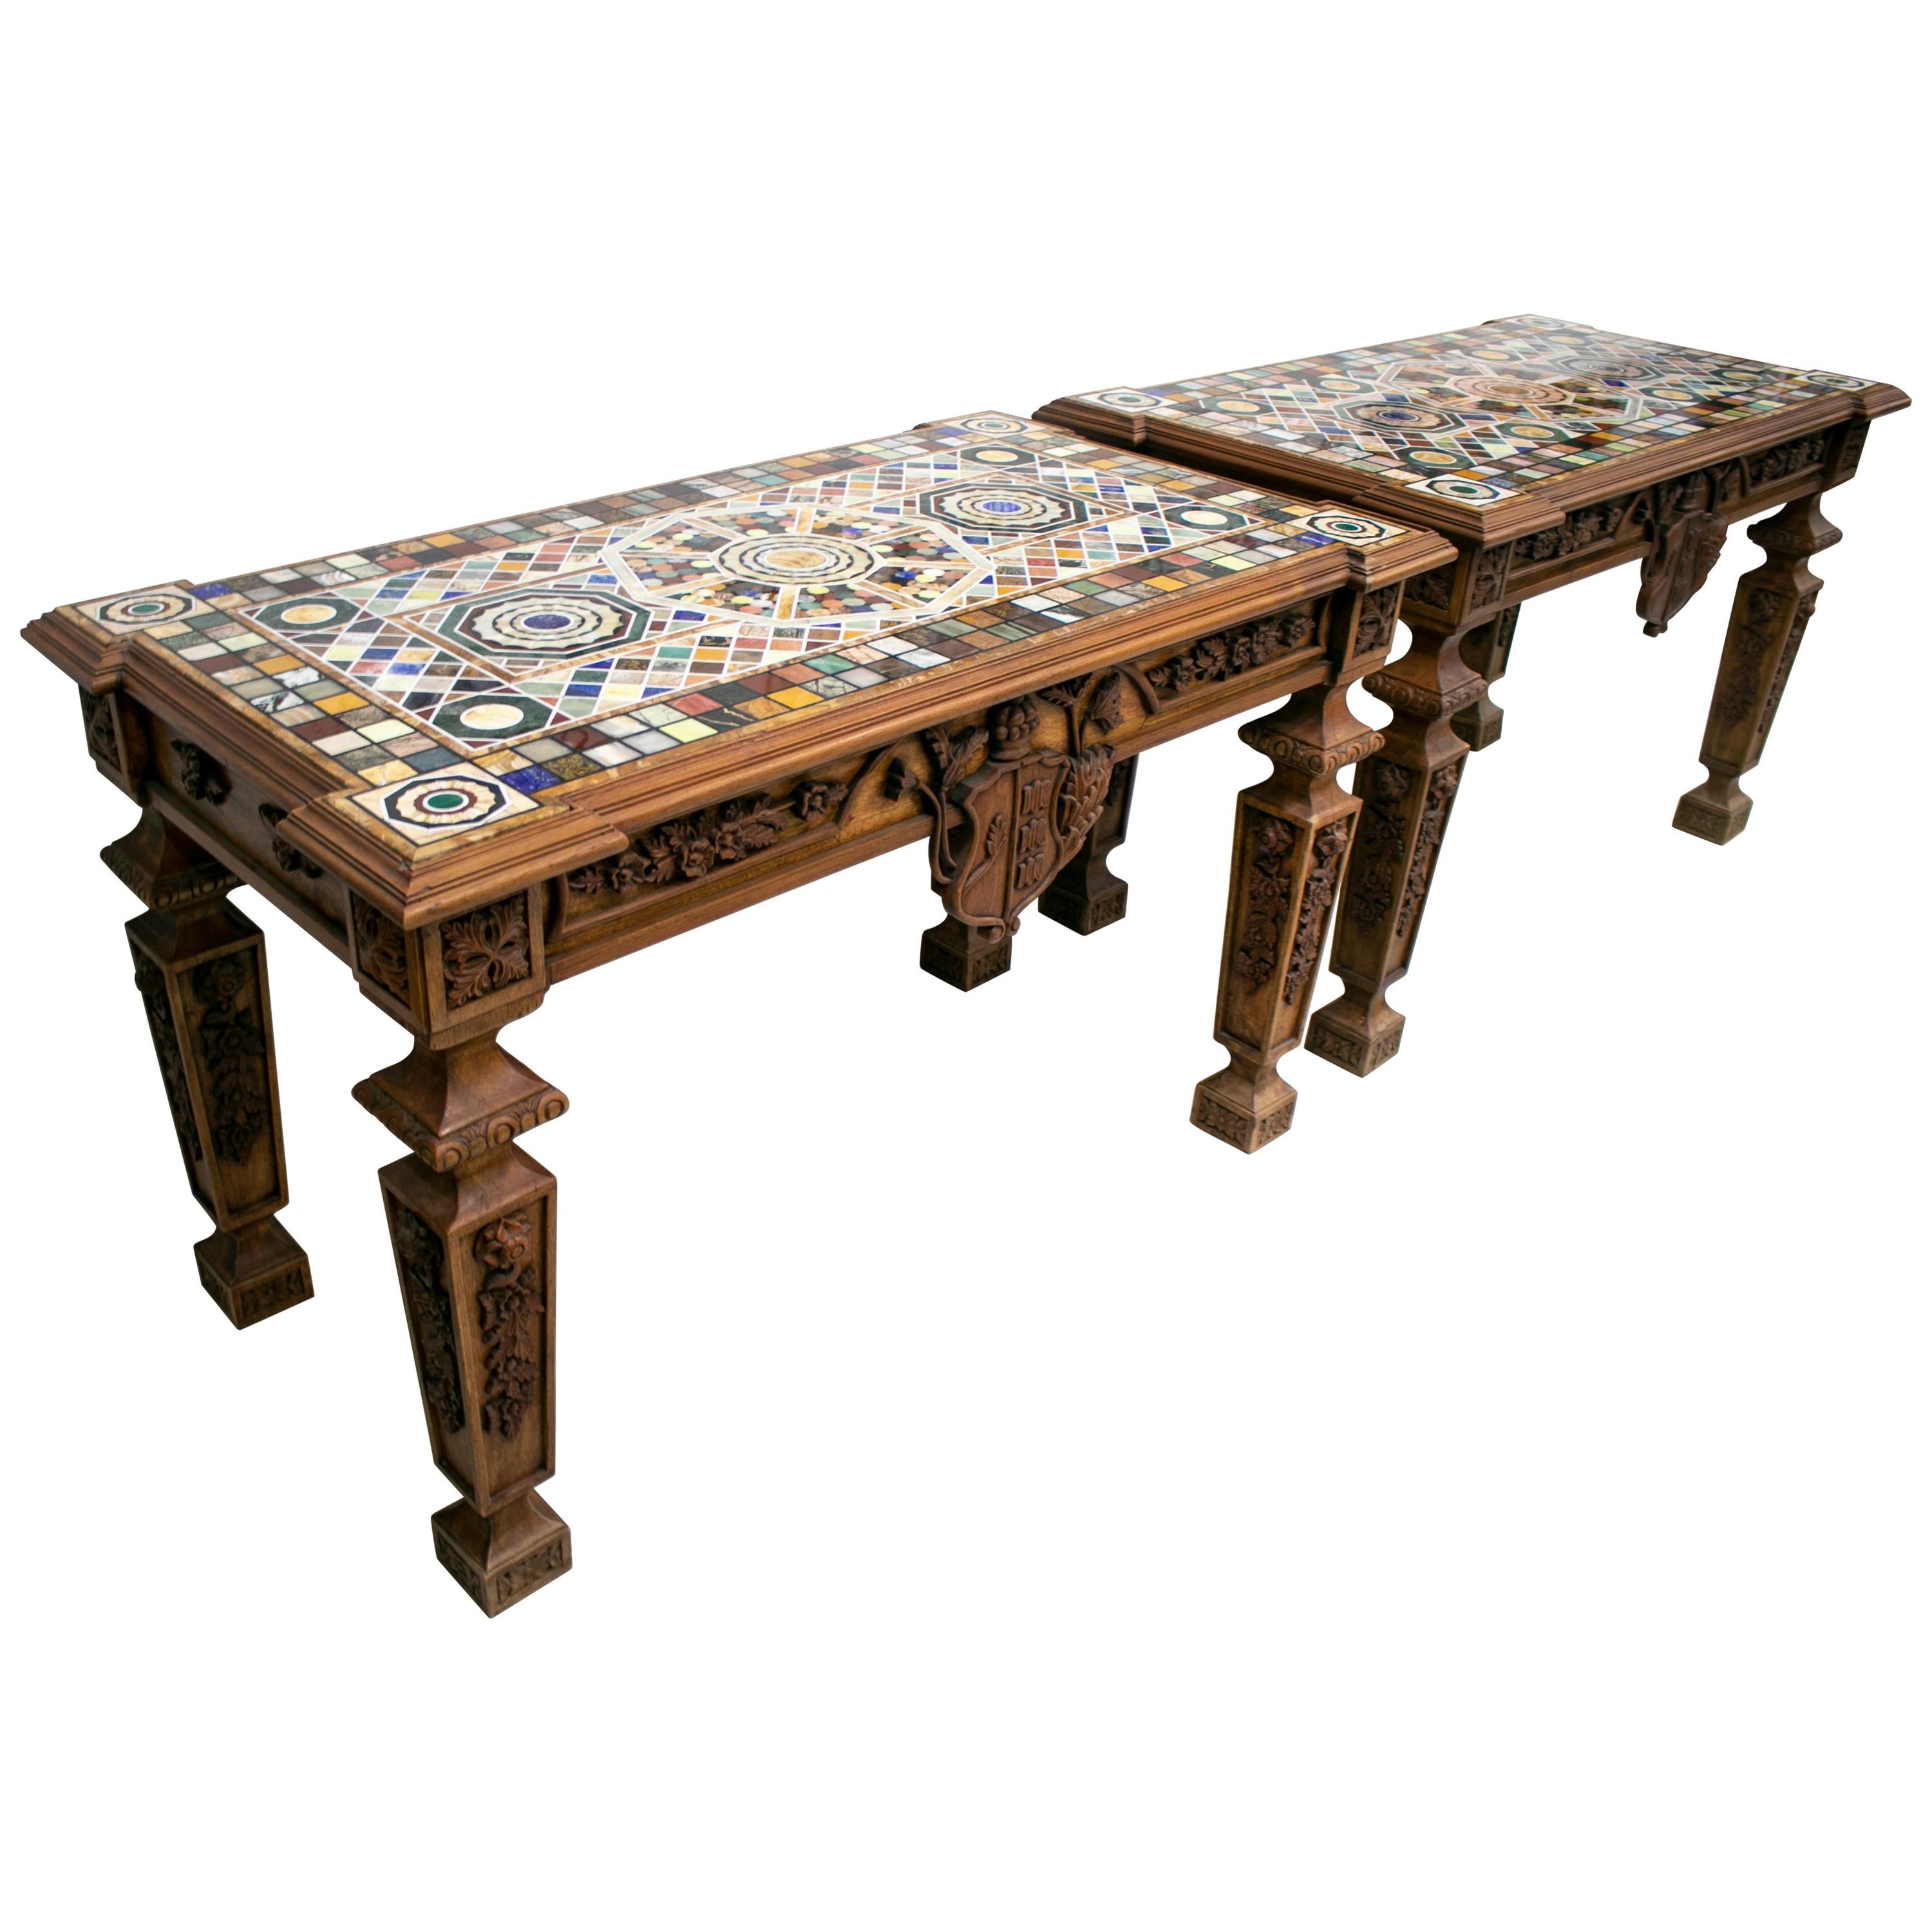 Pair of Handmade Rectangular Pietre Dure Mosaic Top Wooden Relieved Tables